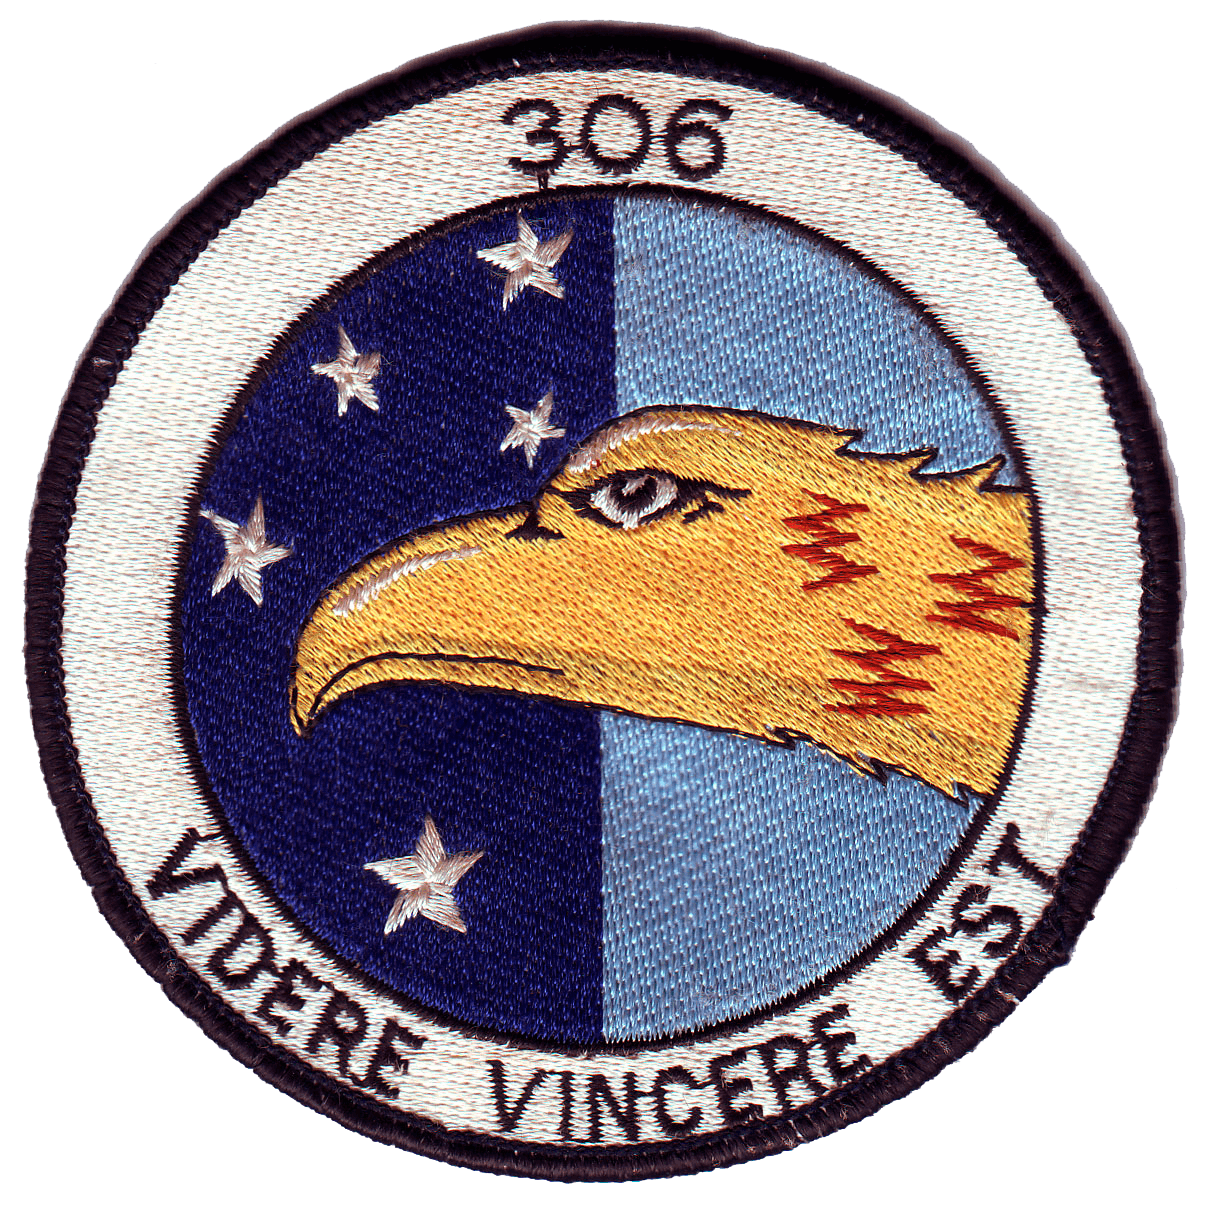 306 Squadron